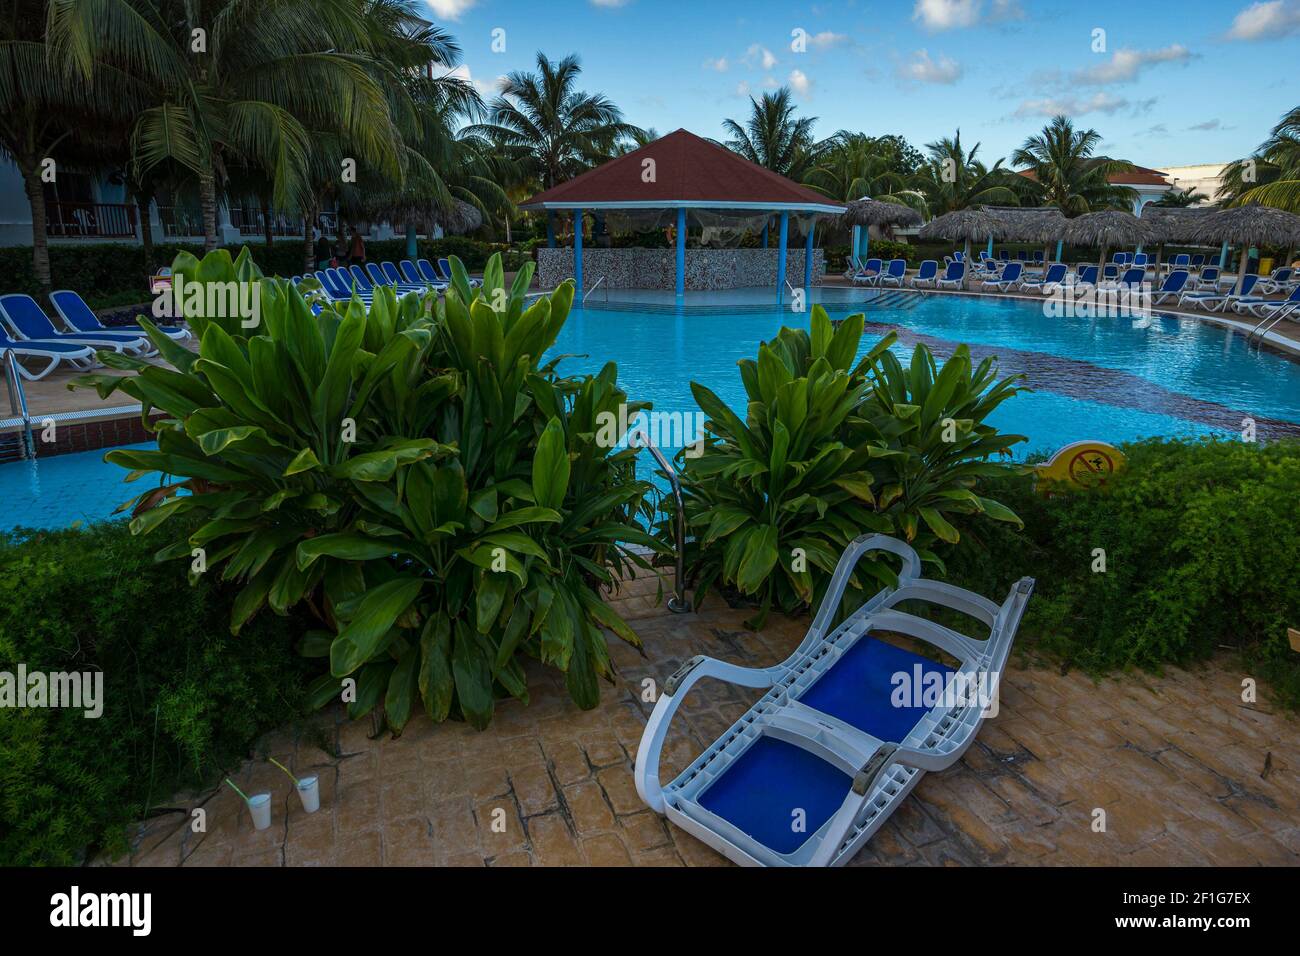 Cayo Santa Clara, Cuba, February 2016 - A beautiful circular pool at a hotel resort of the island Stock Photo